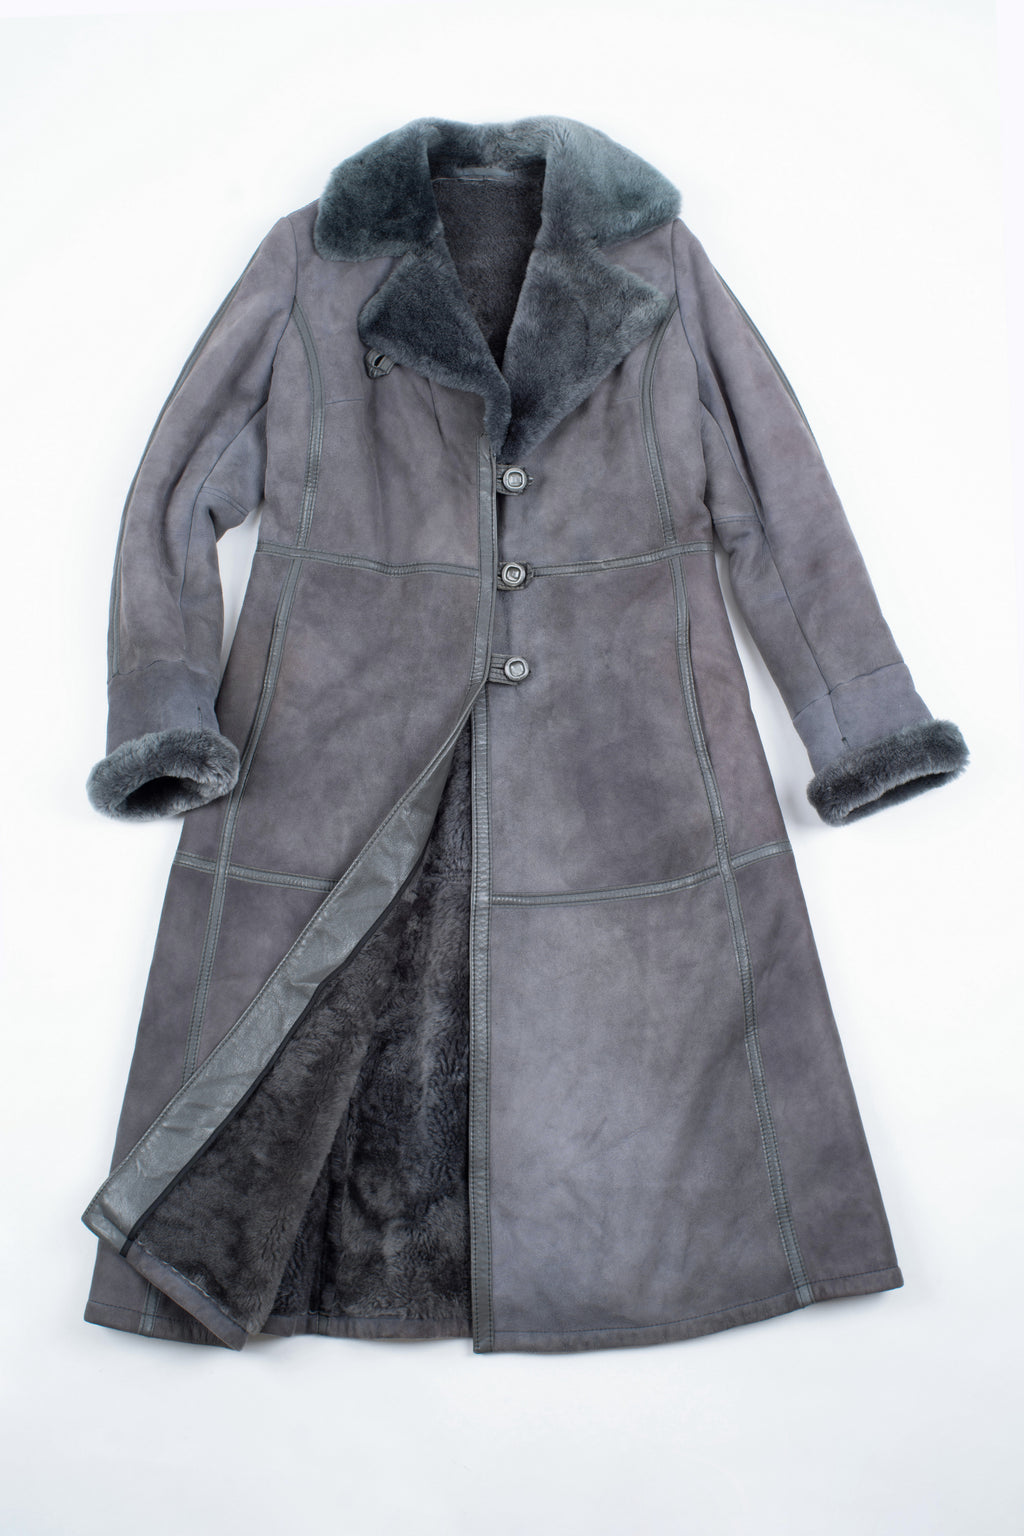 Women's Bostroms Tailored Long Shearling Coat, Women's M